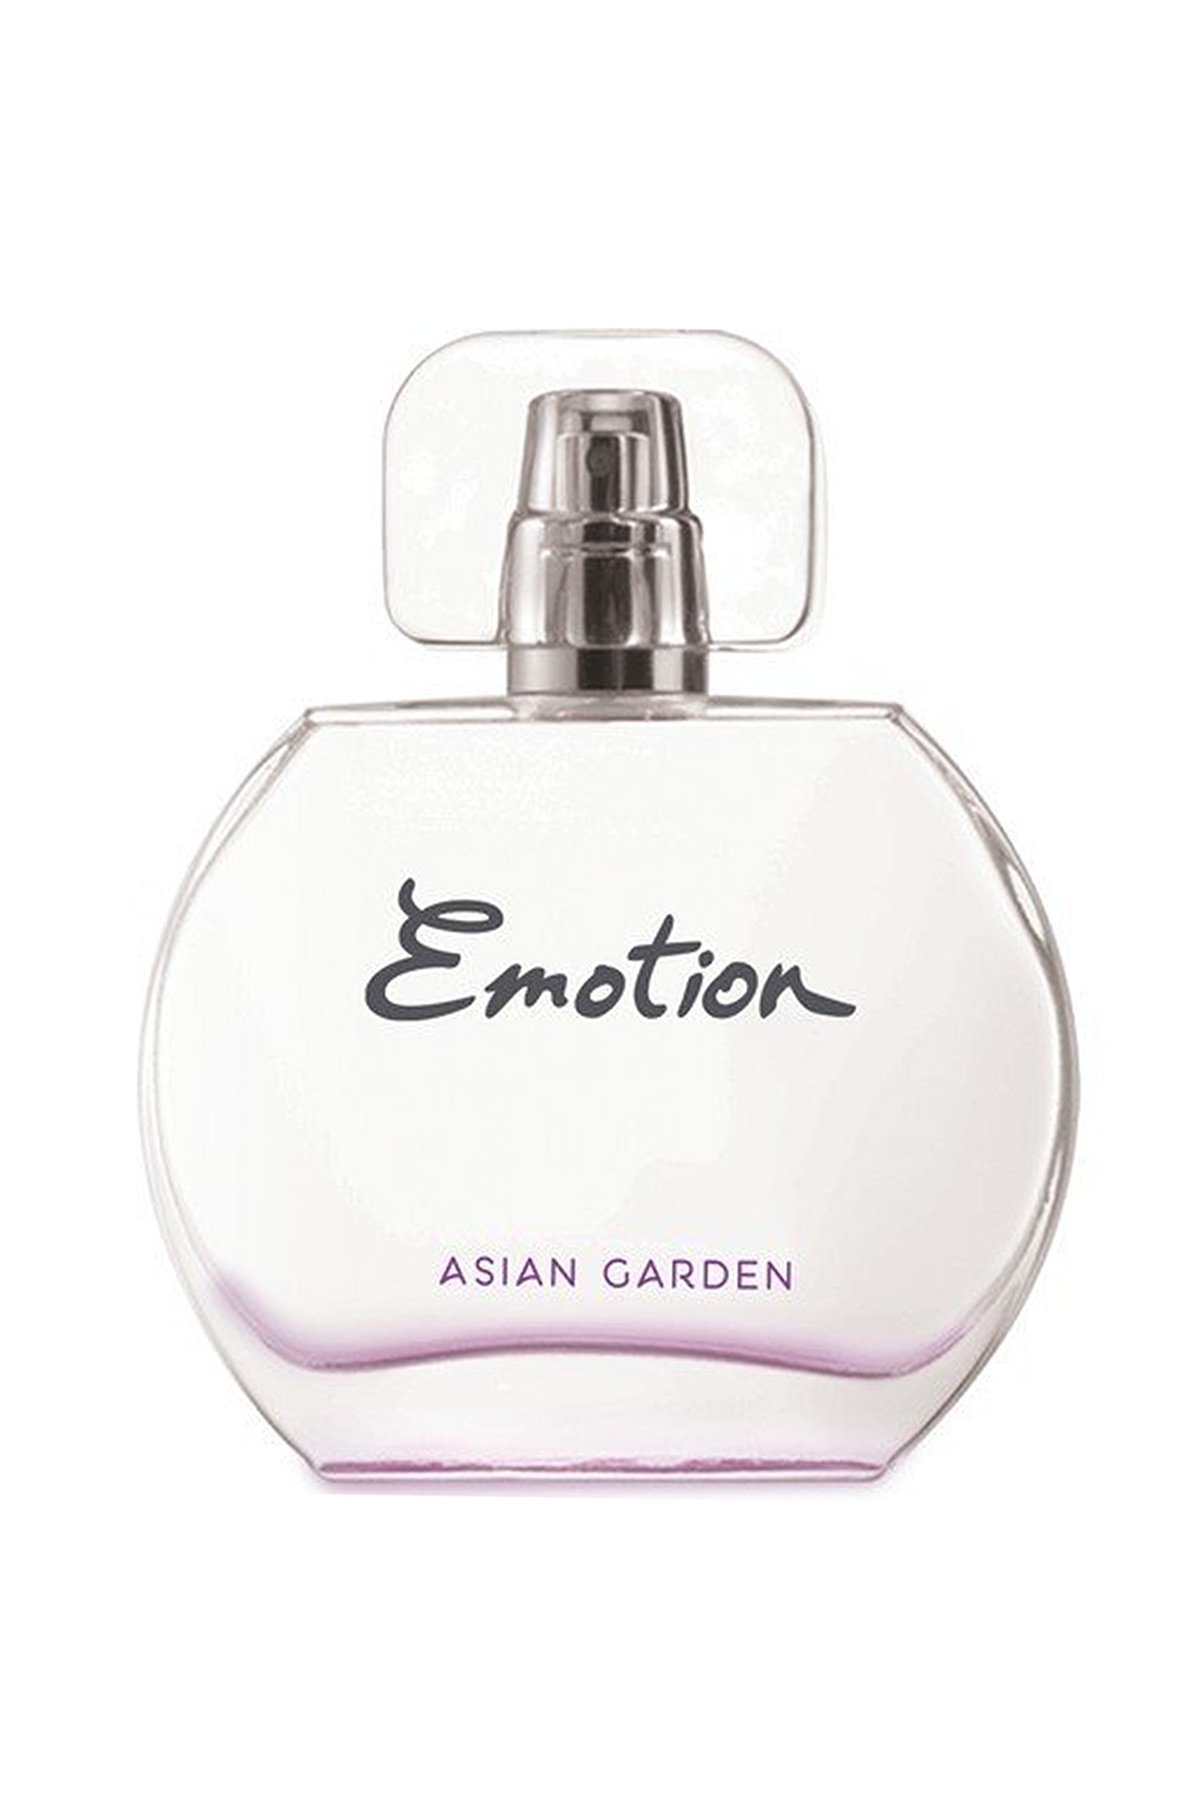 Standart Emotion Edt Asian Garden 50ml